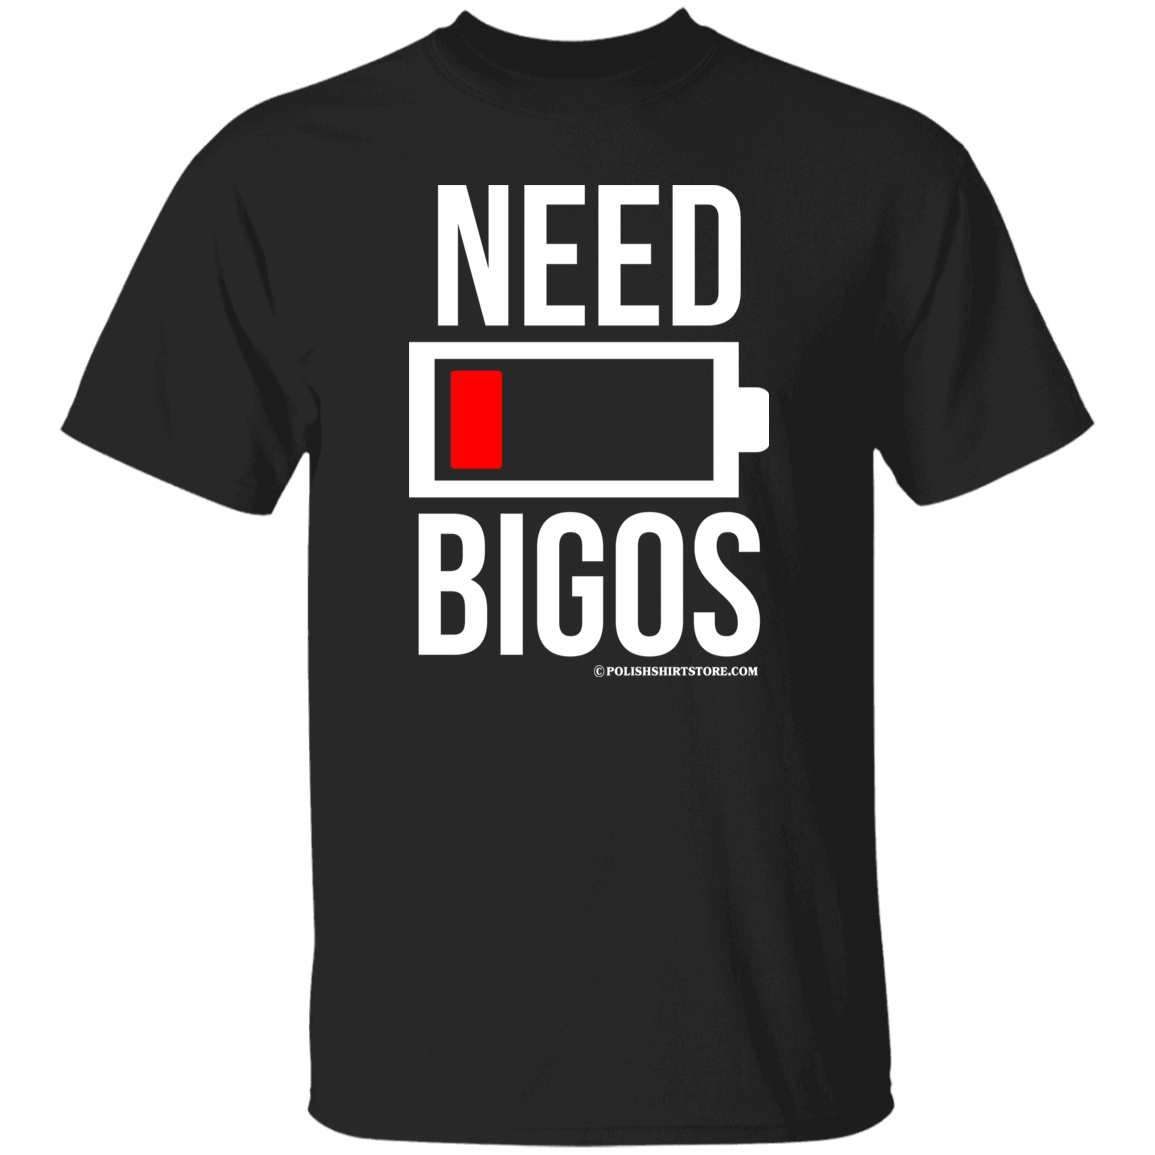 Need Bigos Battery Low Apparel CustomCat G500 5.3 oz. T-Shirt Black S